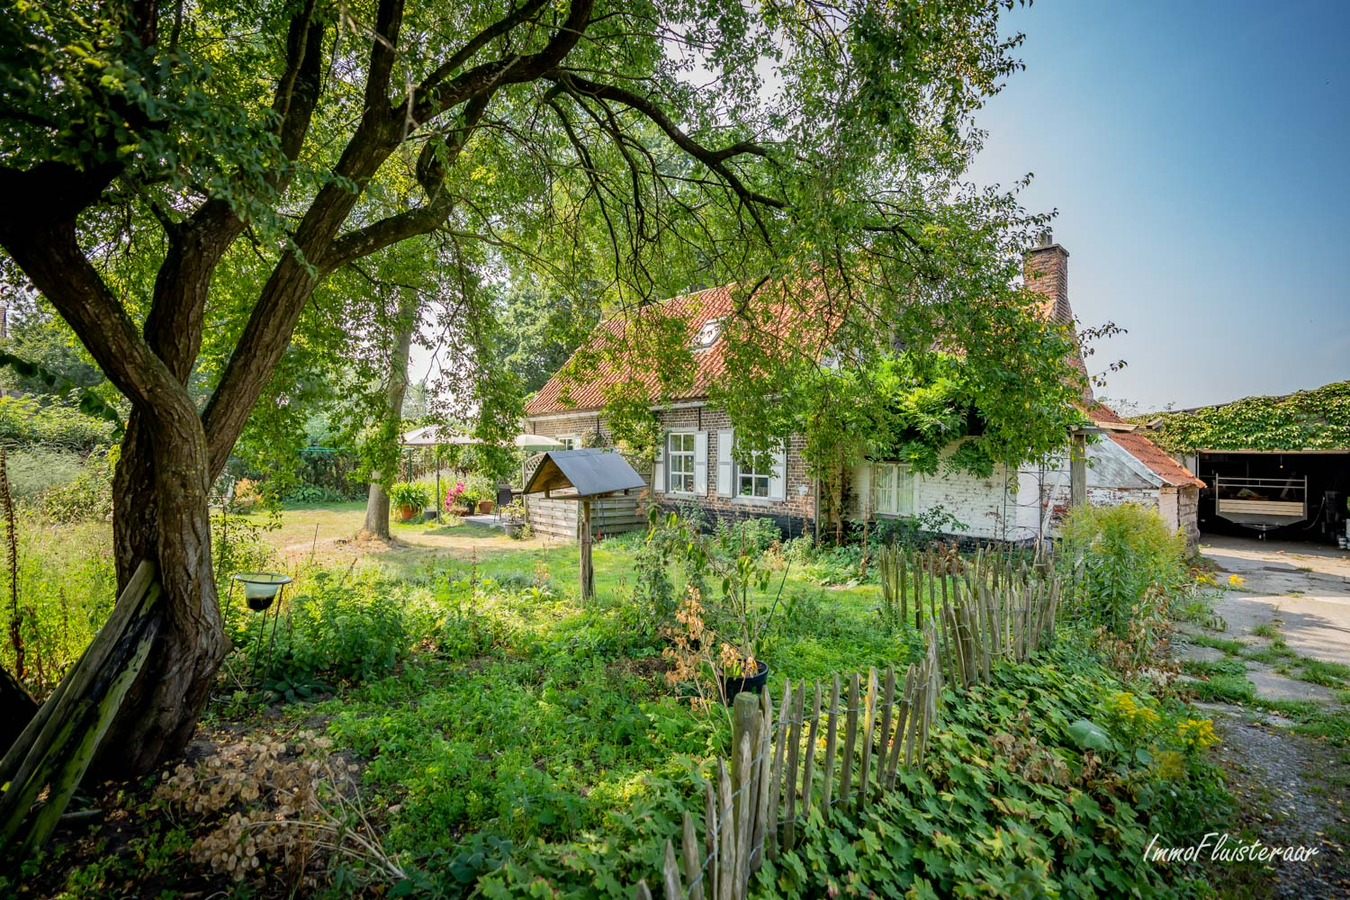 Property sold in Sint-Laureins